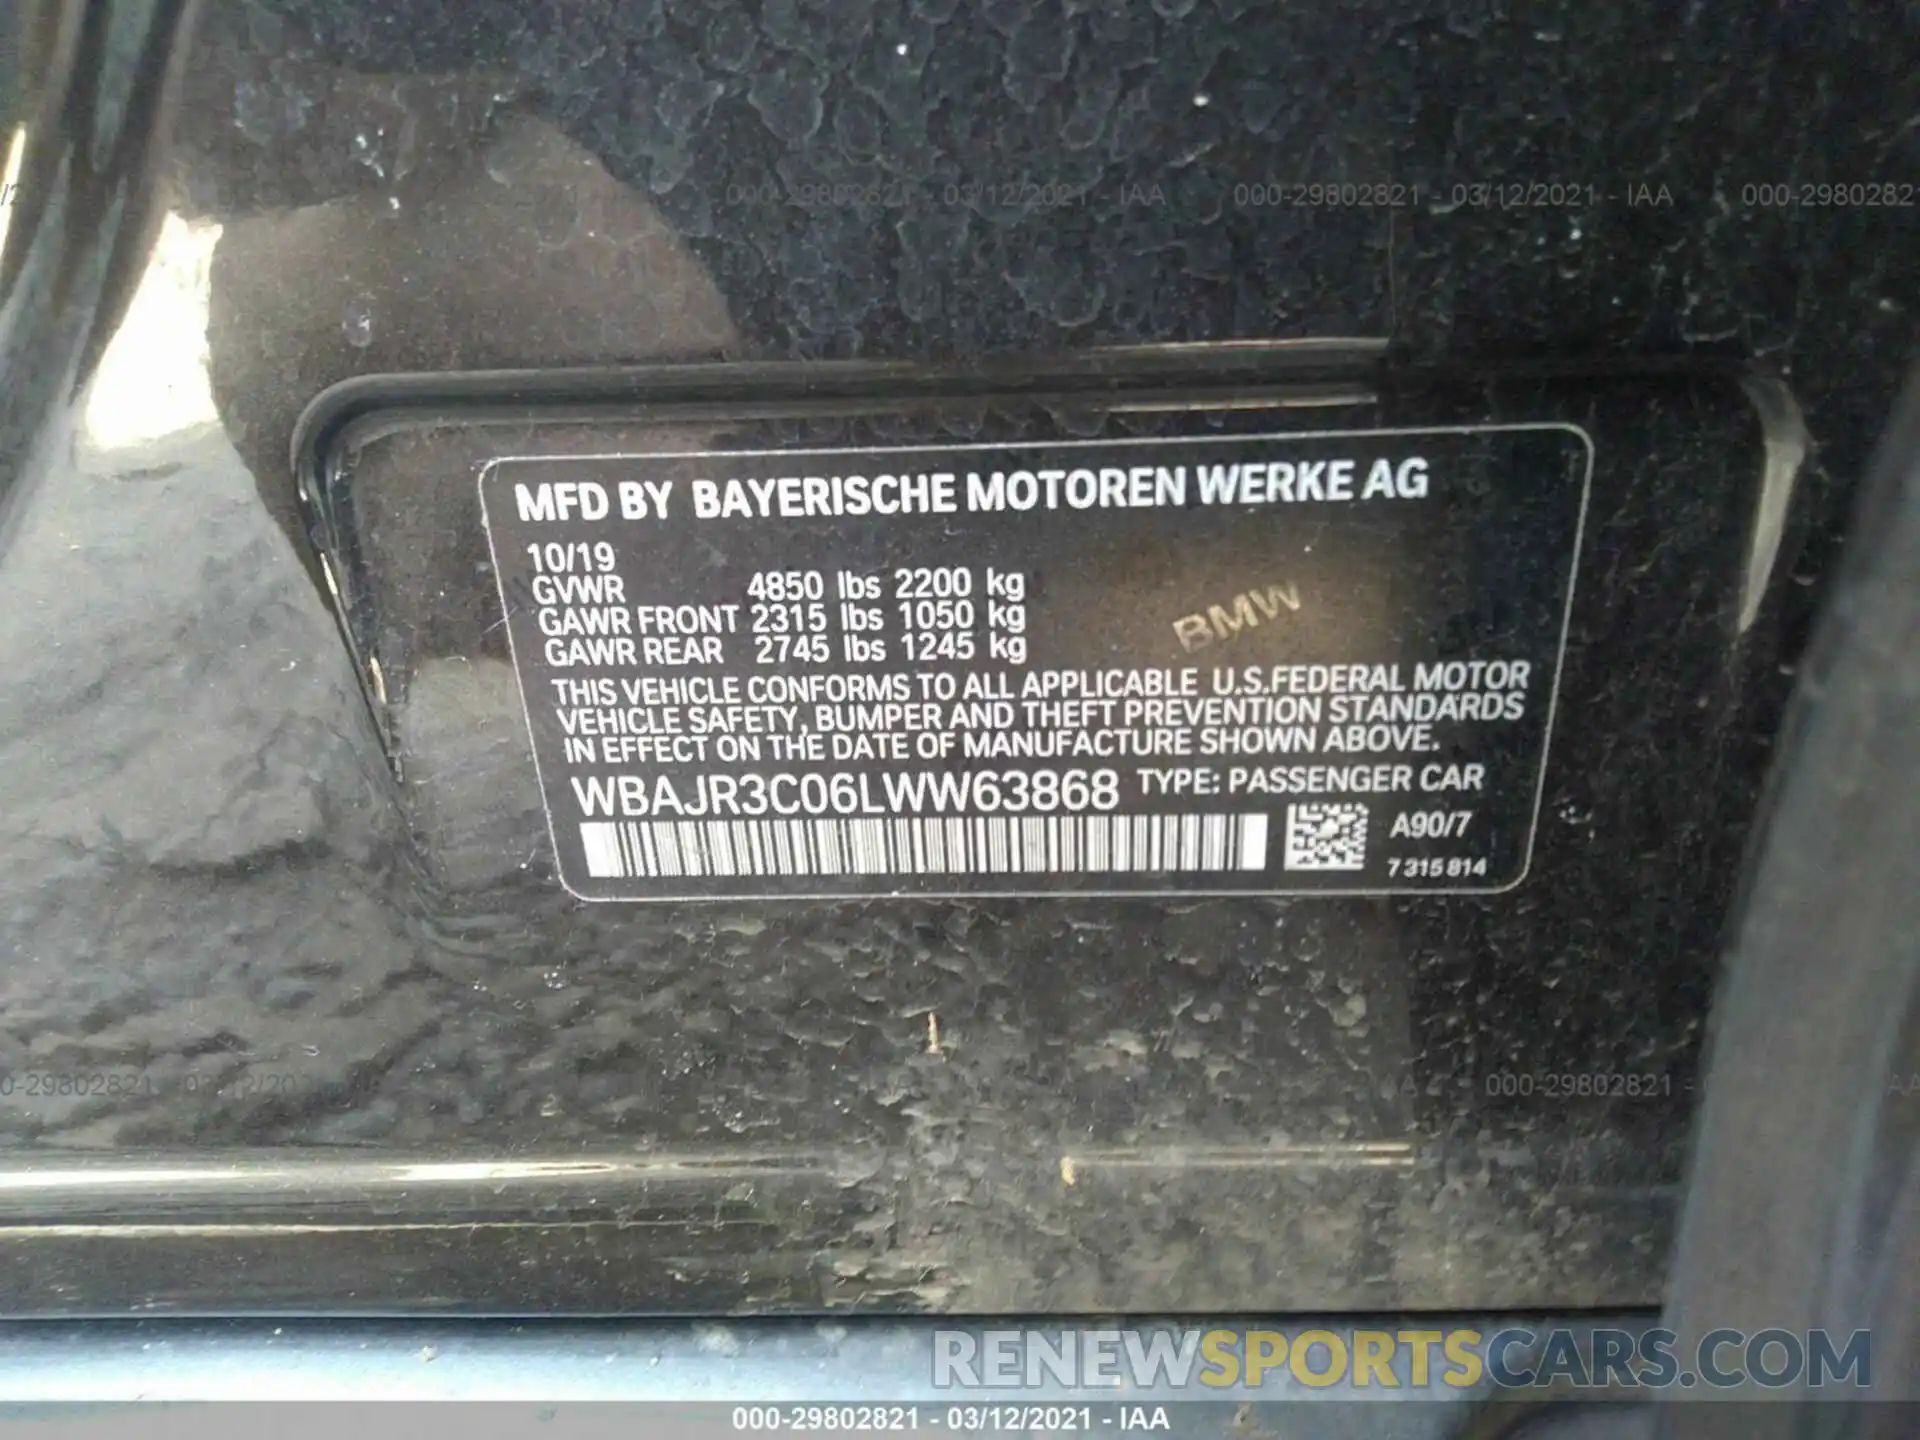 9 Photograph of a damaged car WBAJR3C06LWW63868 BMW 5 SERIES 2020